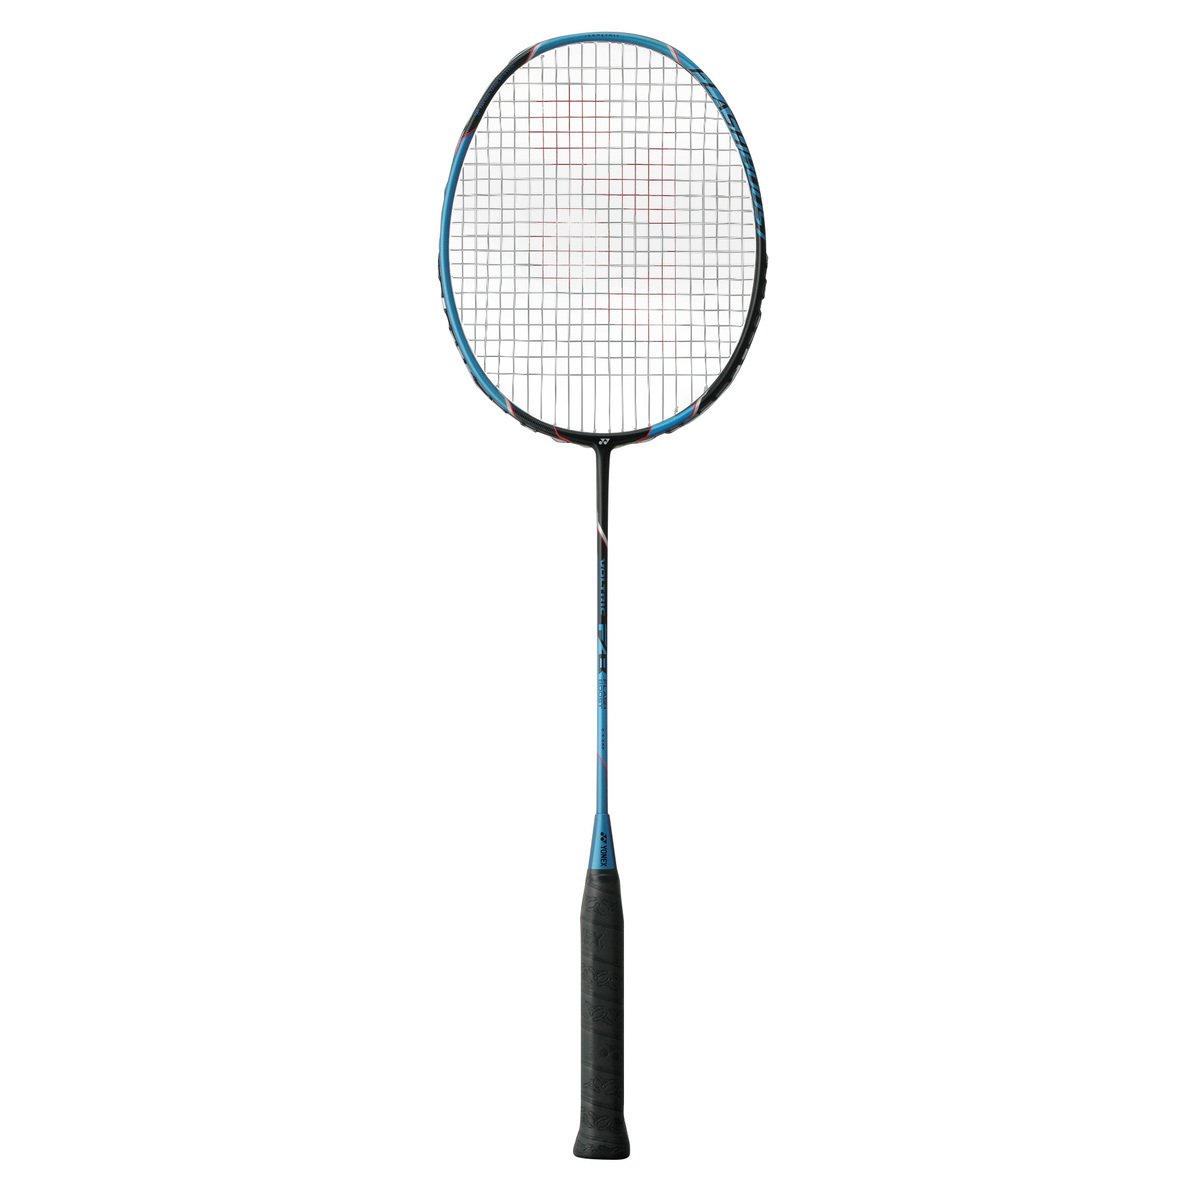 Yonex Unstrung Badminton Racket Voltric Flash Boost 5U G5, Black Blue, Made in Japan